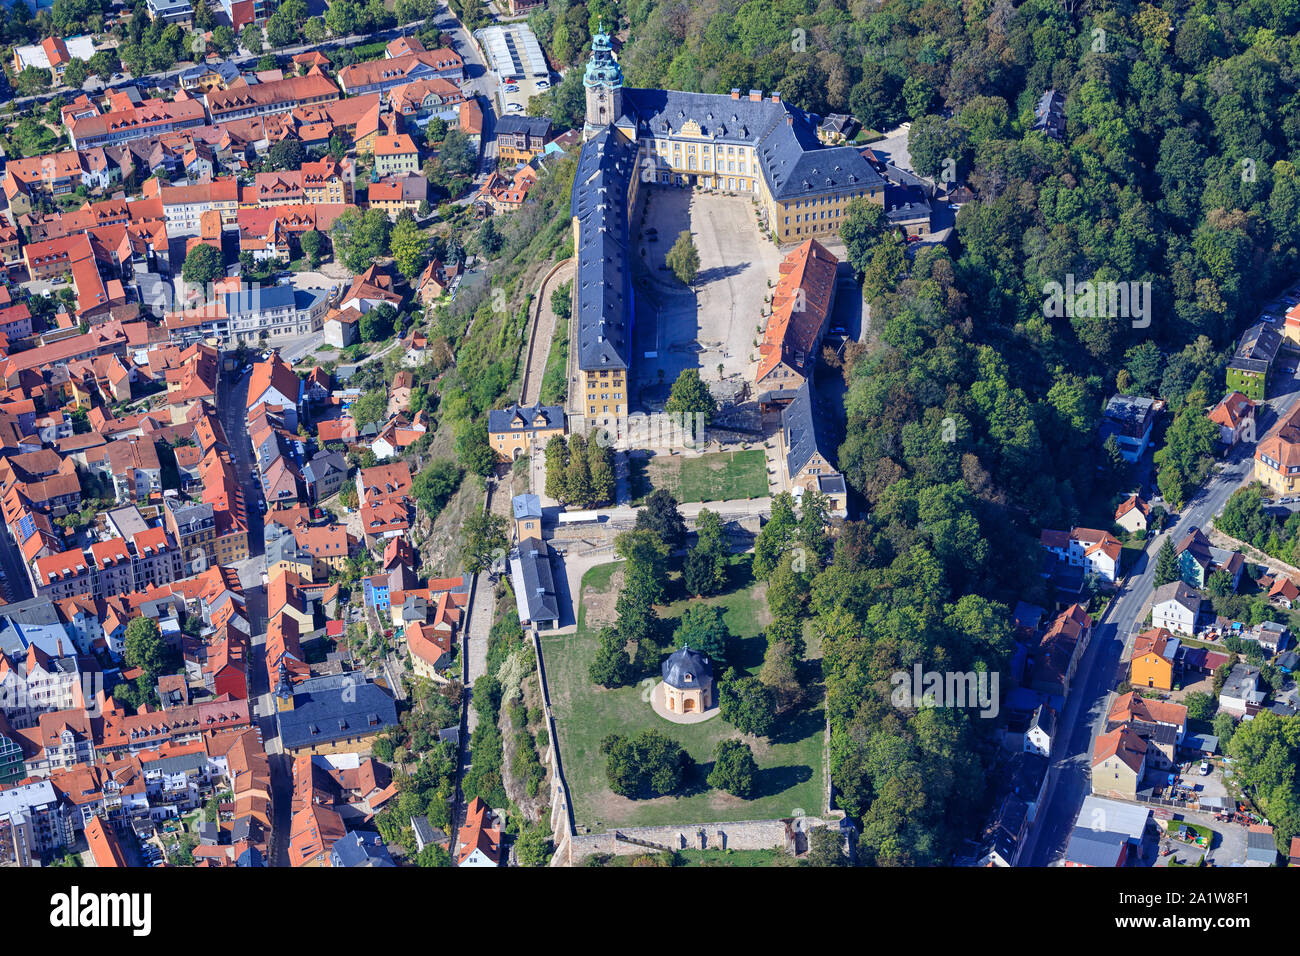 Castle Heidecksburg in Rudolstadt in Germany. Stock Photo